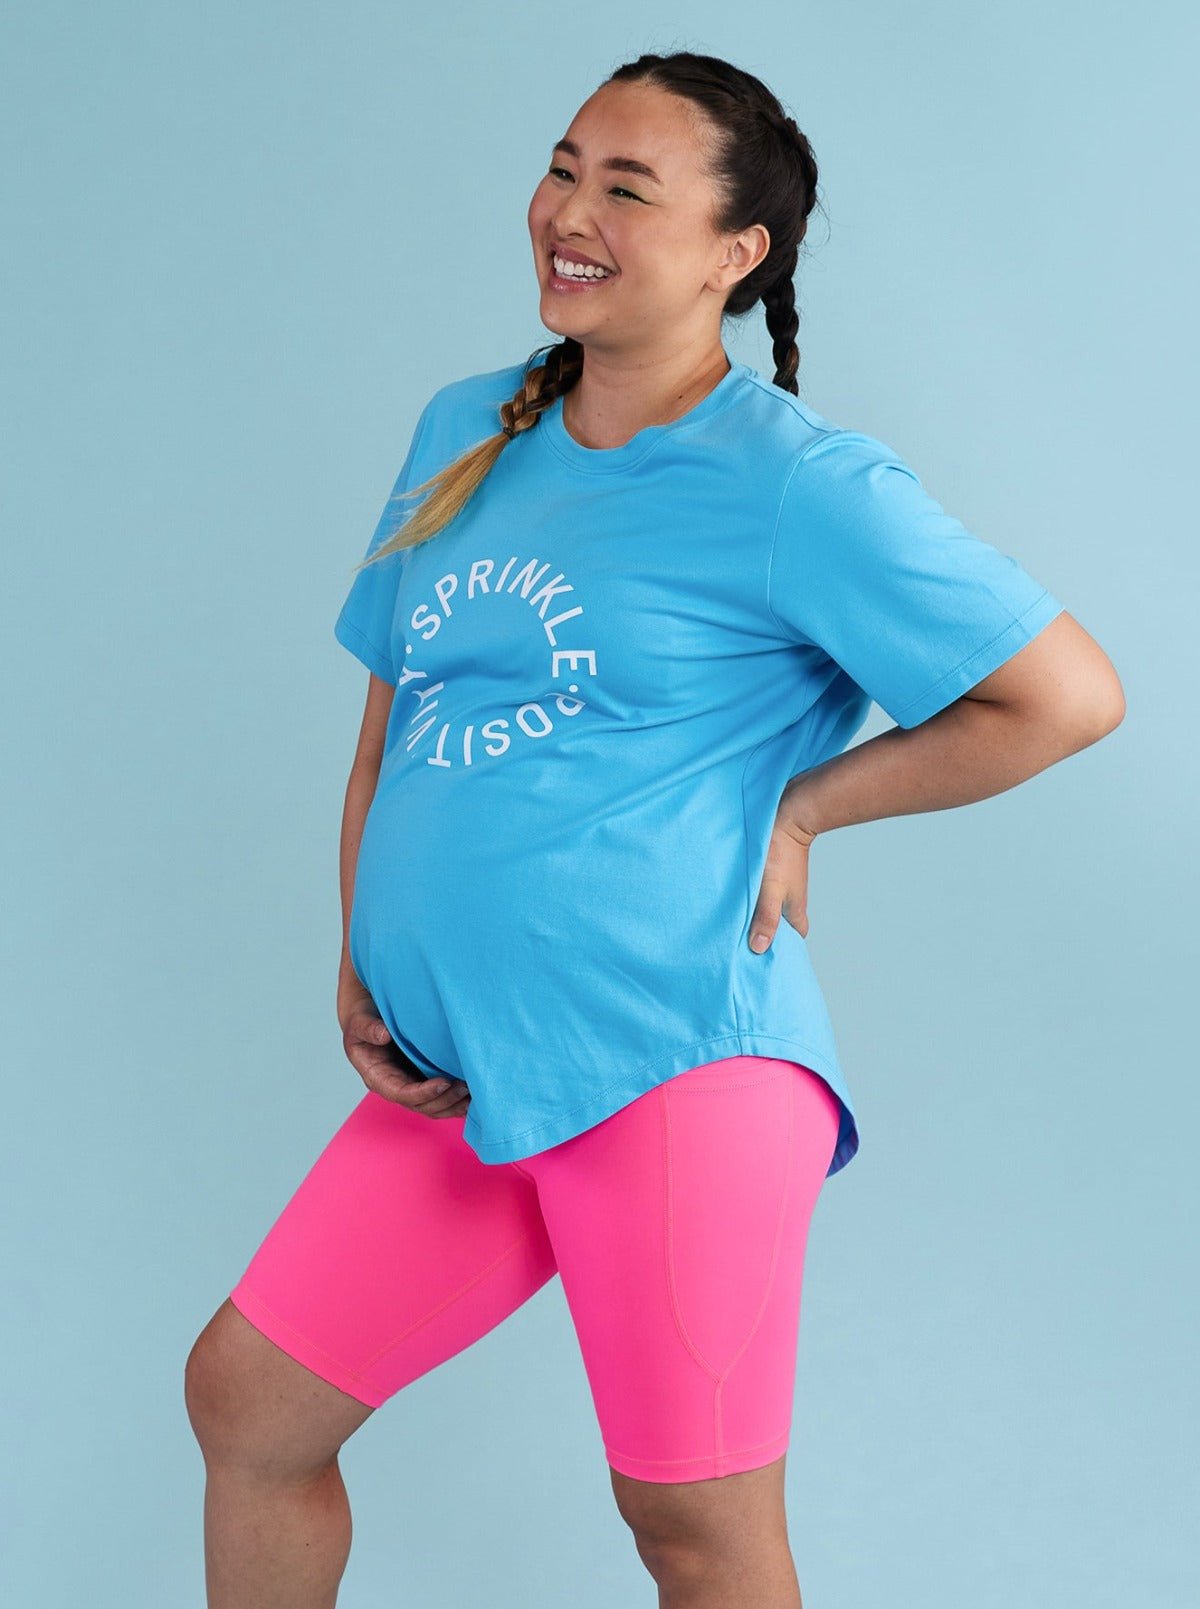 Azure Blue Sprinkle Positivi-Tee - oversized organic cotton t shirt pregnant woman